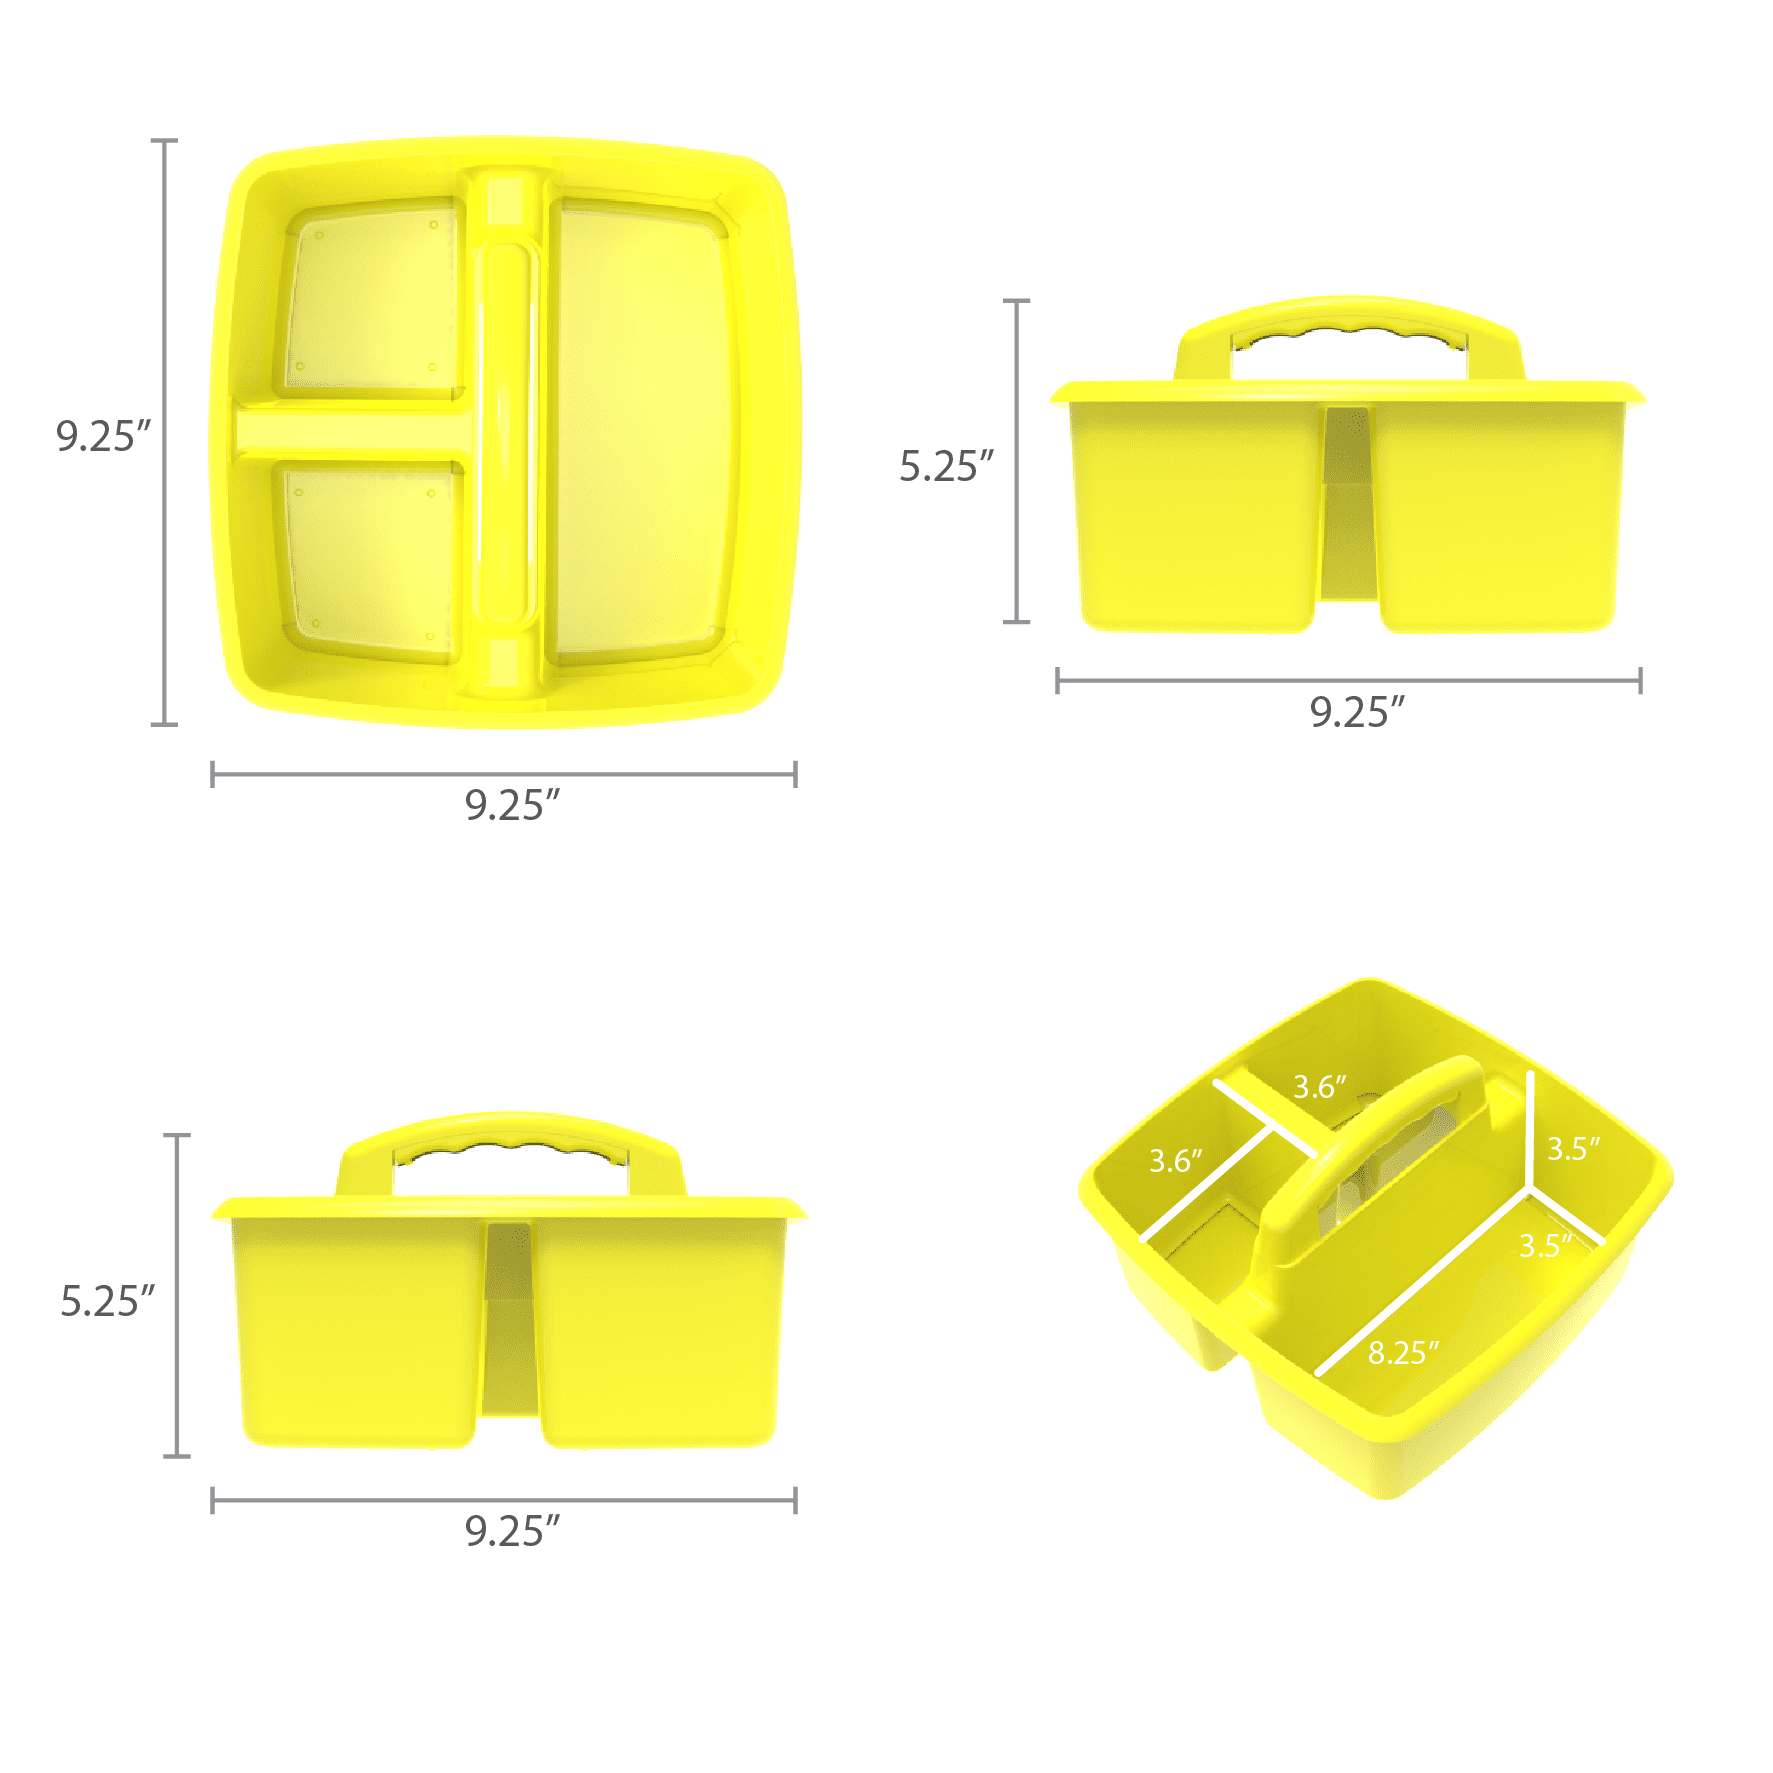 Storex 00950U06C Small Caddy, Yellow (Pack of 6)